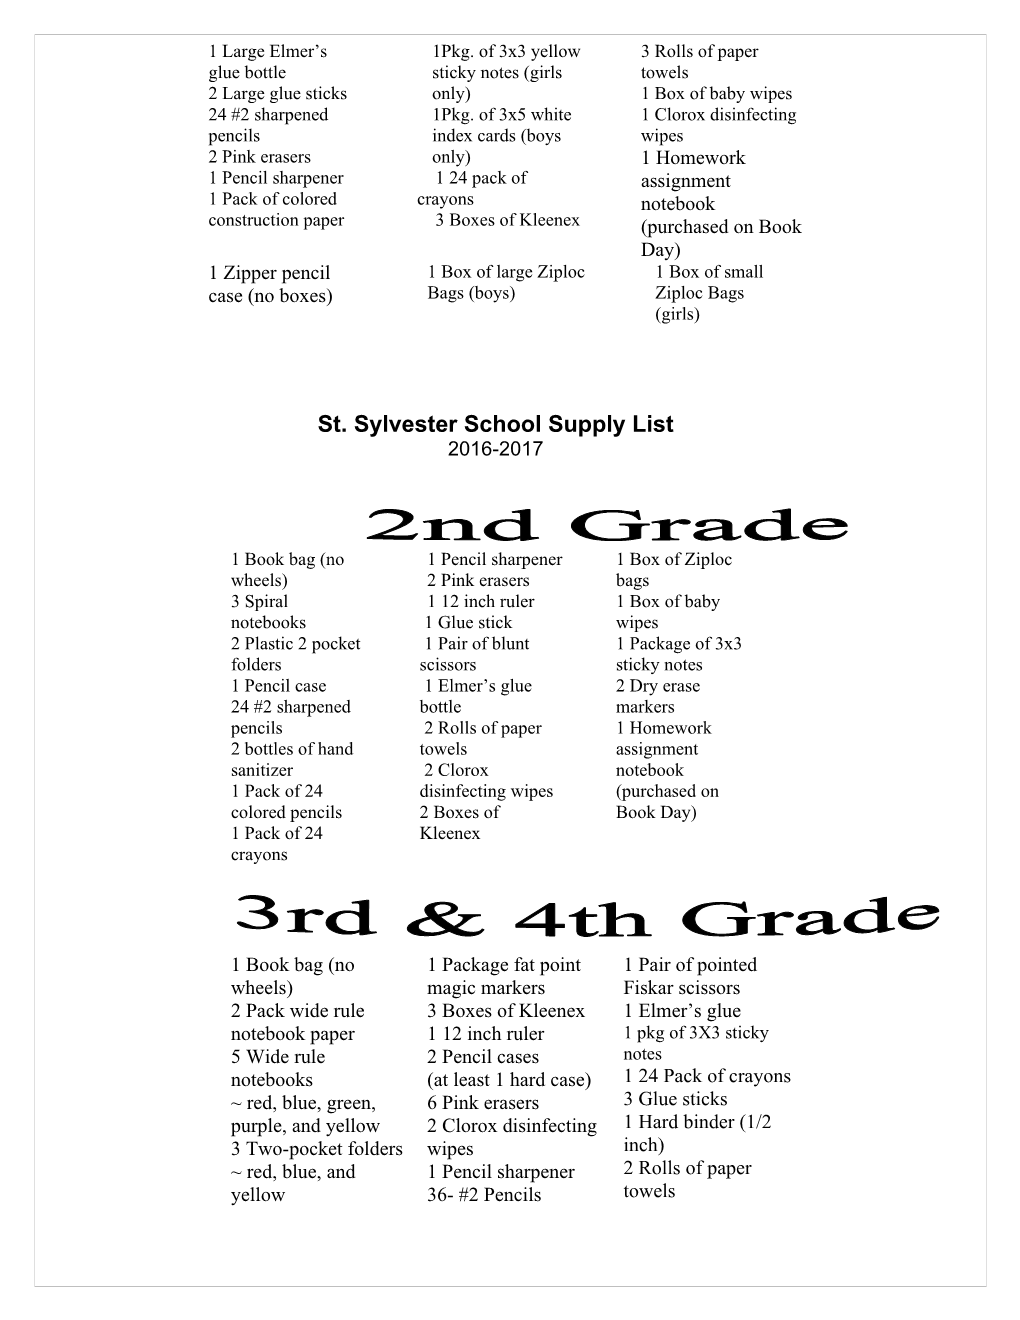 St. Sylvester School Supply List